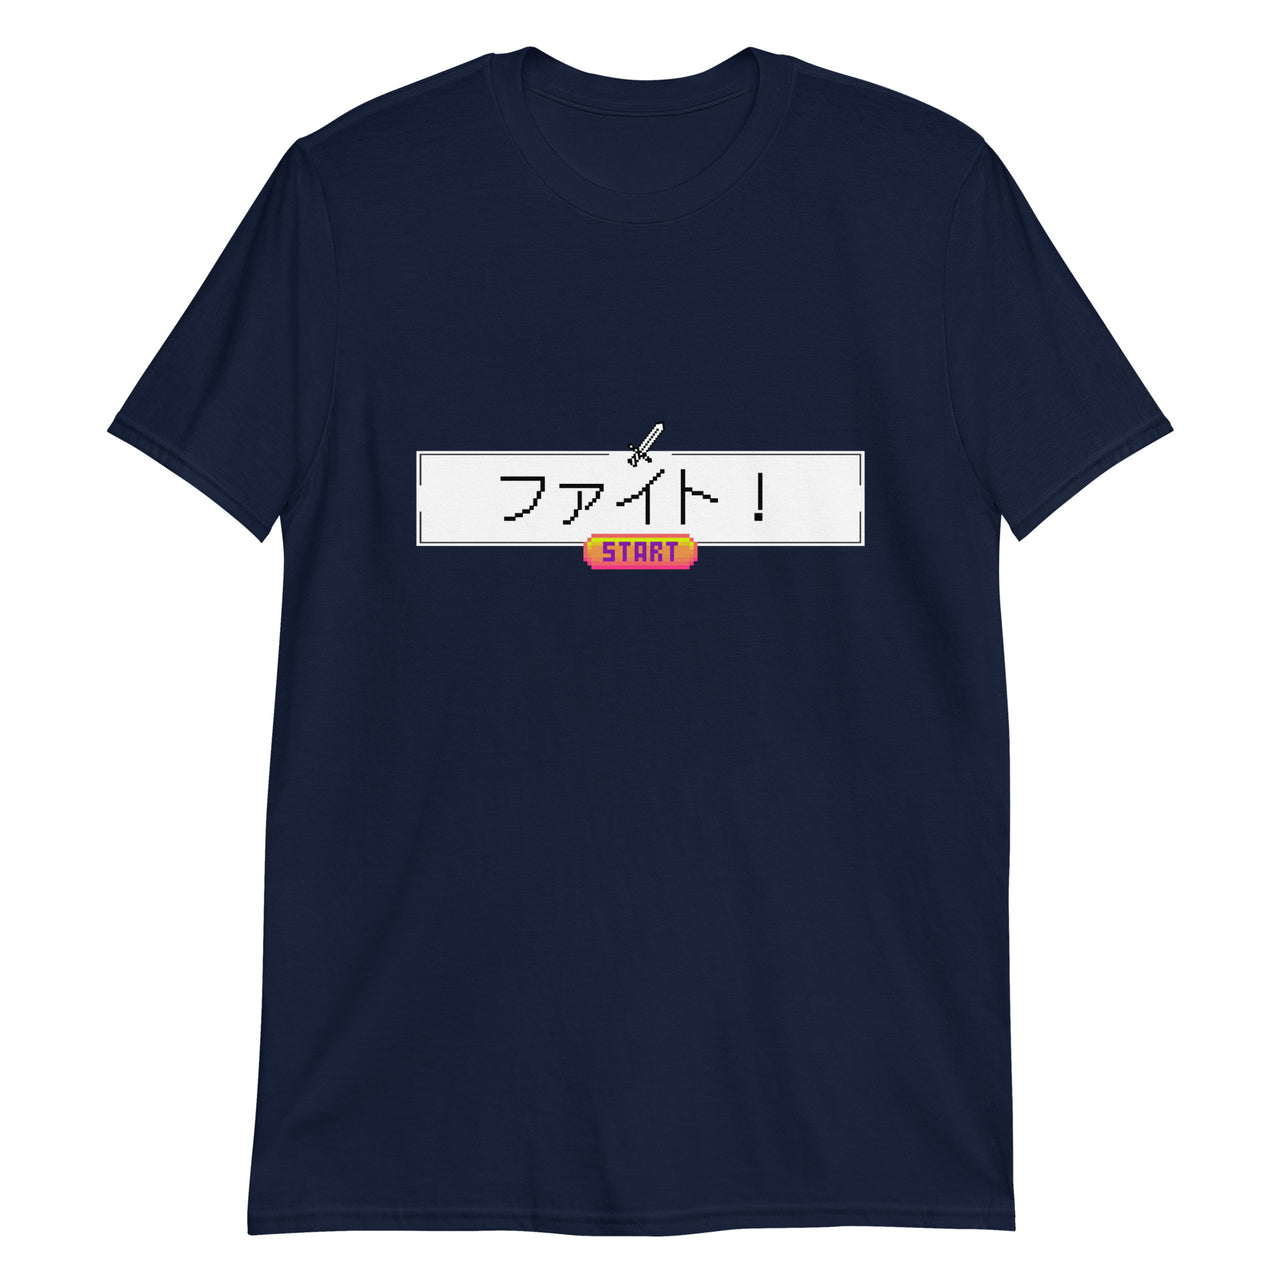 Press Start to Fight! Japanese Short-Sleeve Unisex T-Shirt